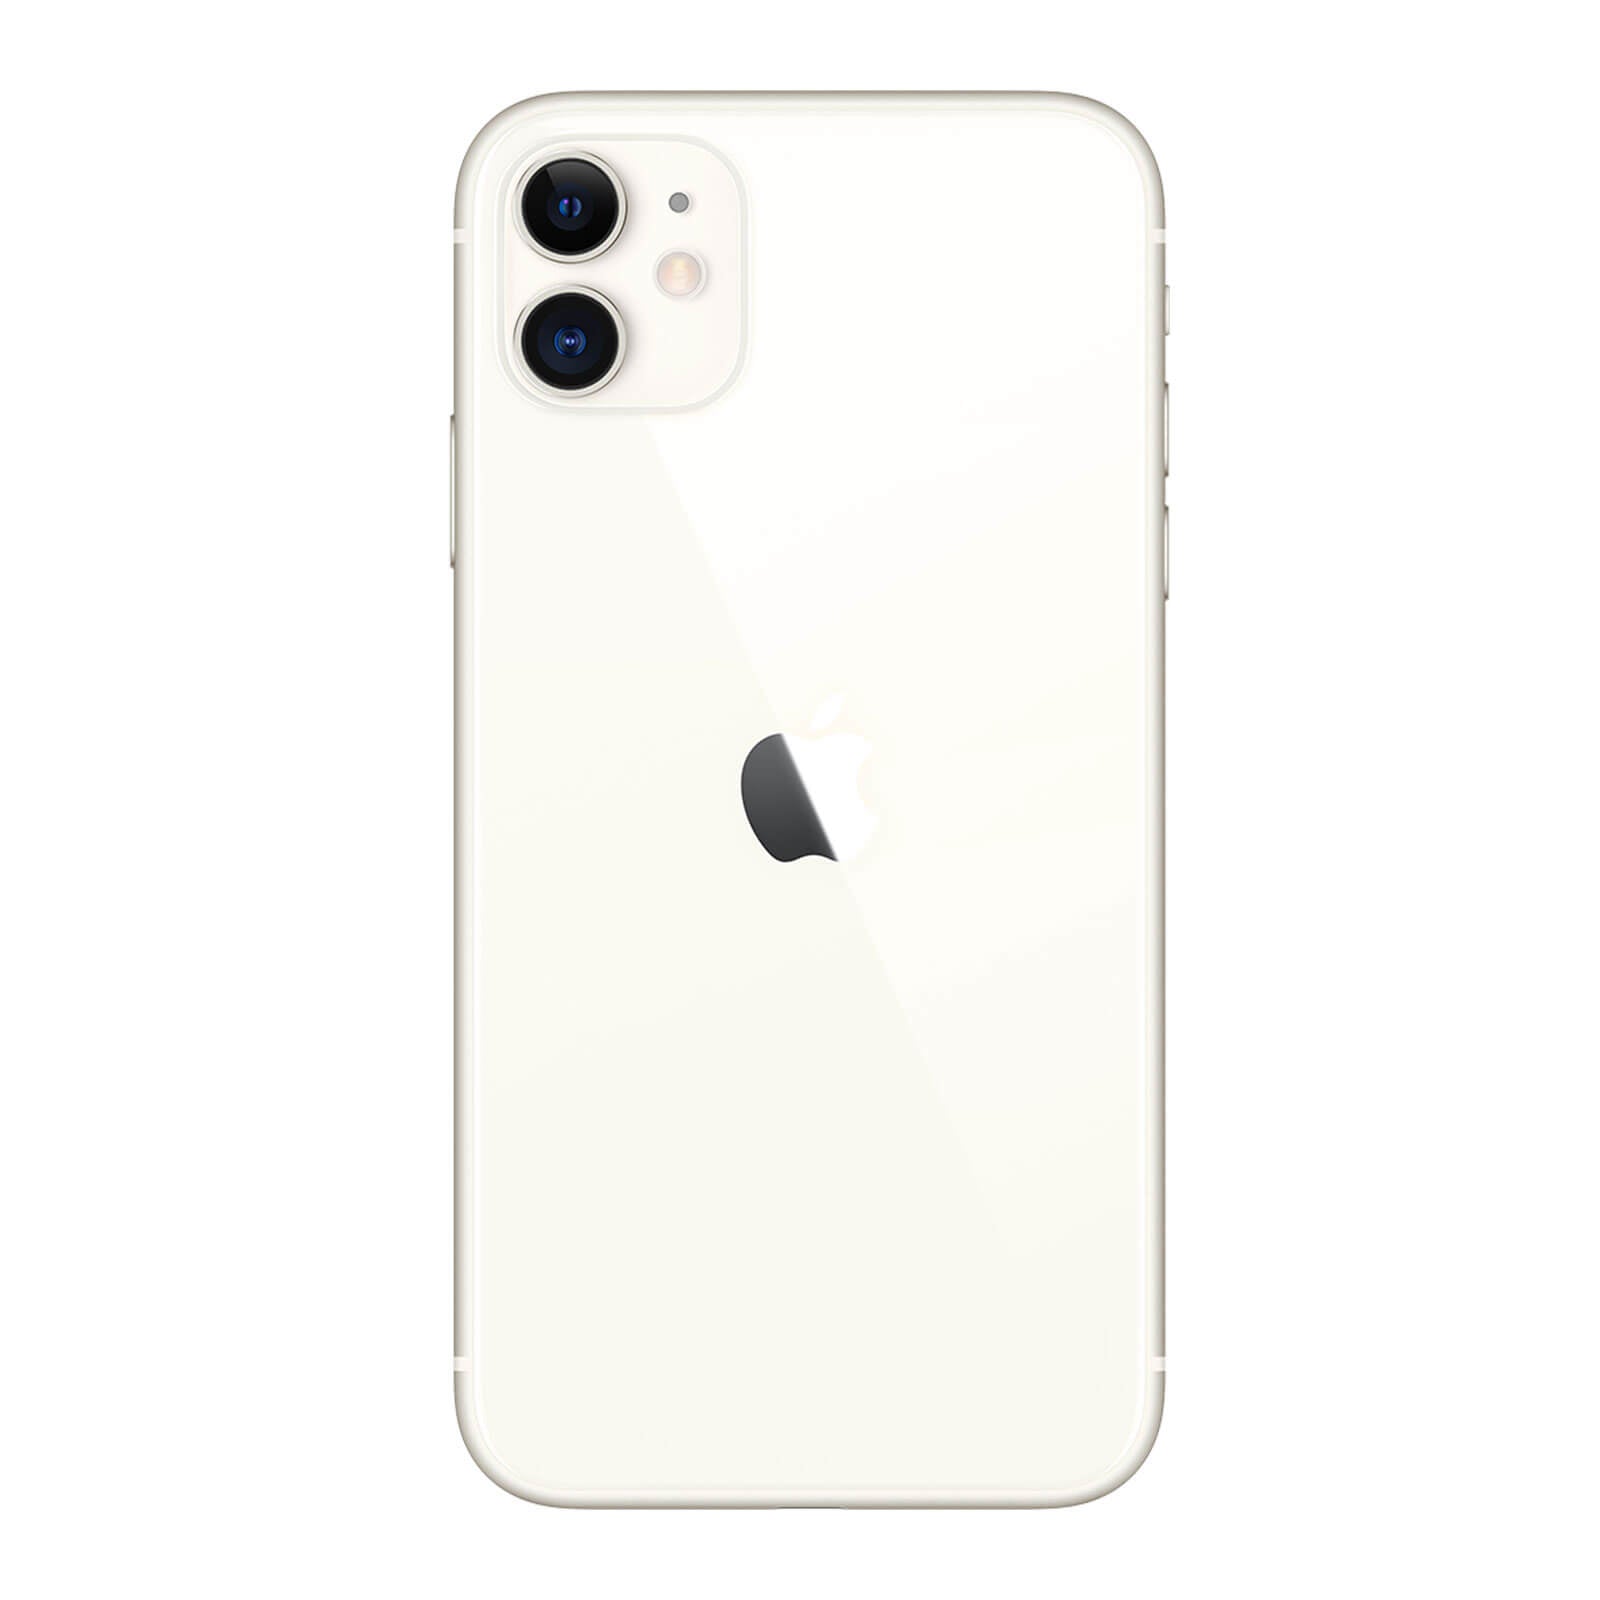 Apple iPhone 11 256GB White Pristine - Unlocked